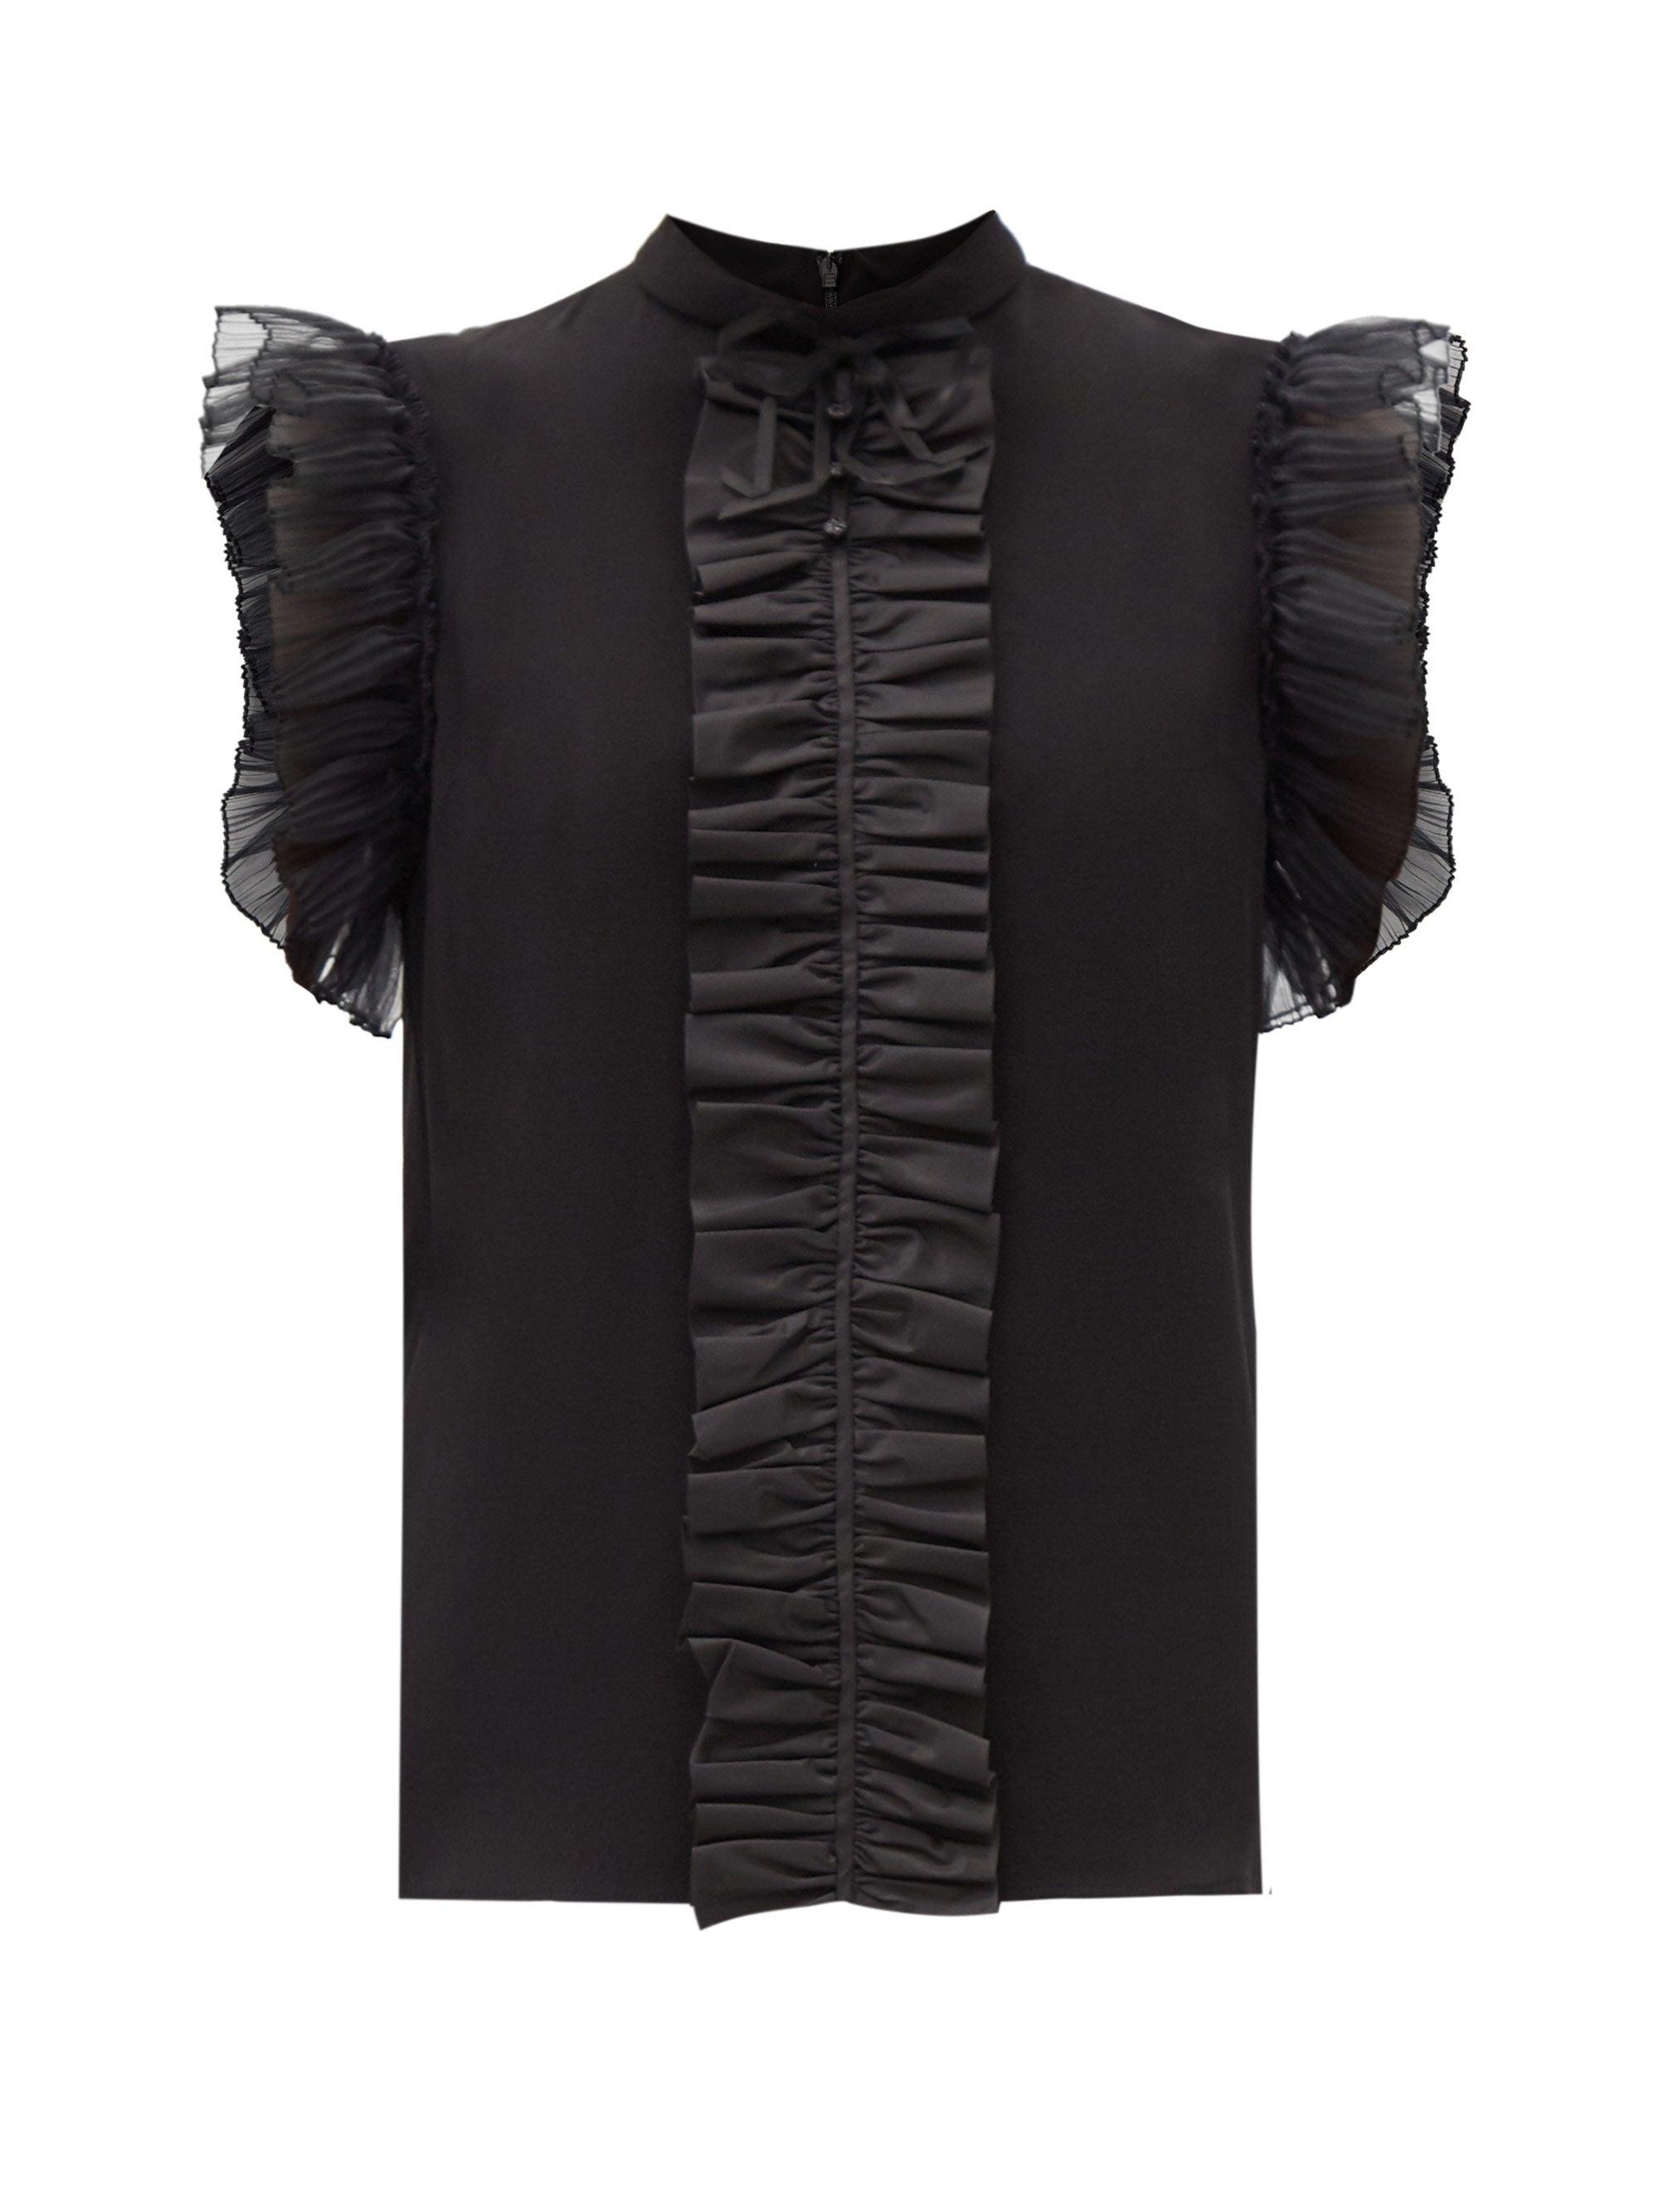 Gucci Ruffled Silk Blouse in Black - Lyst